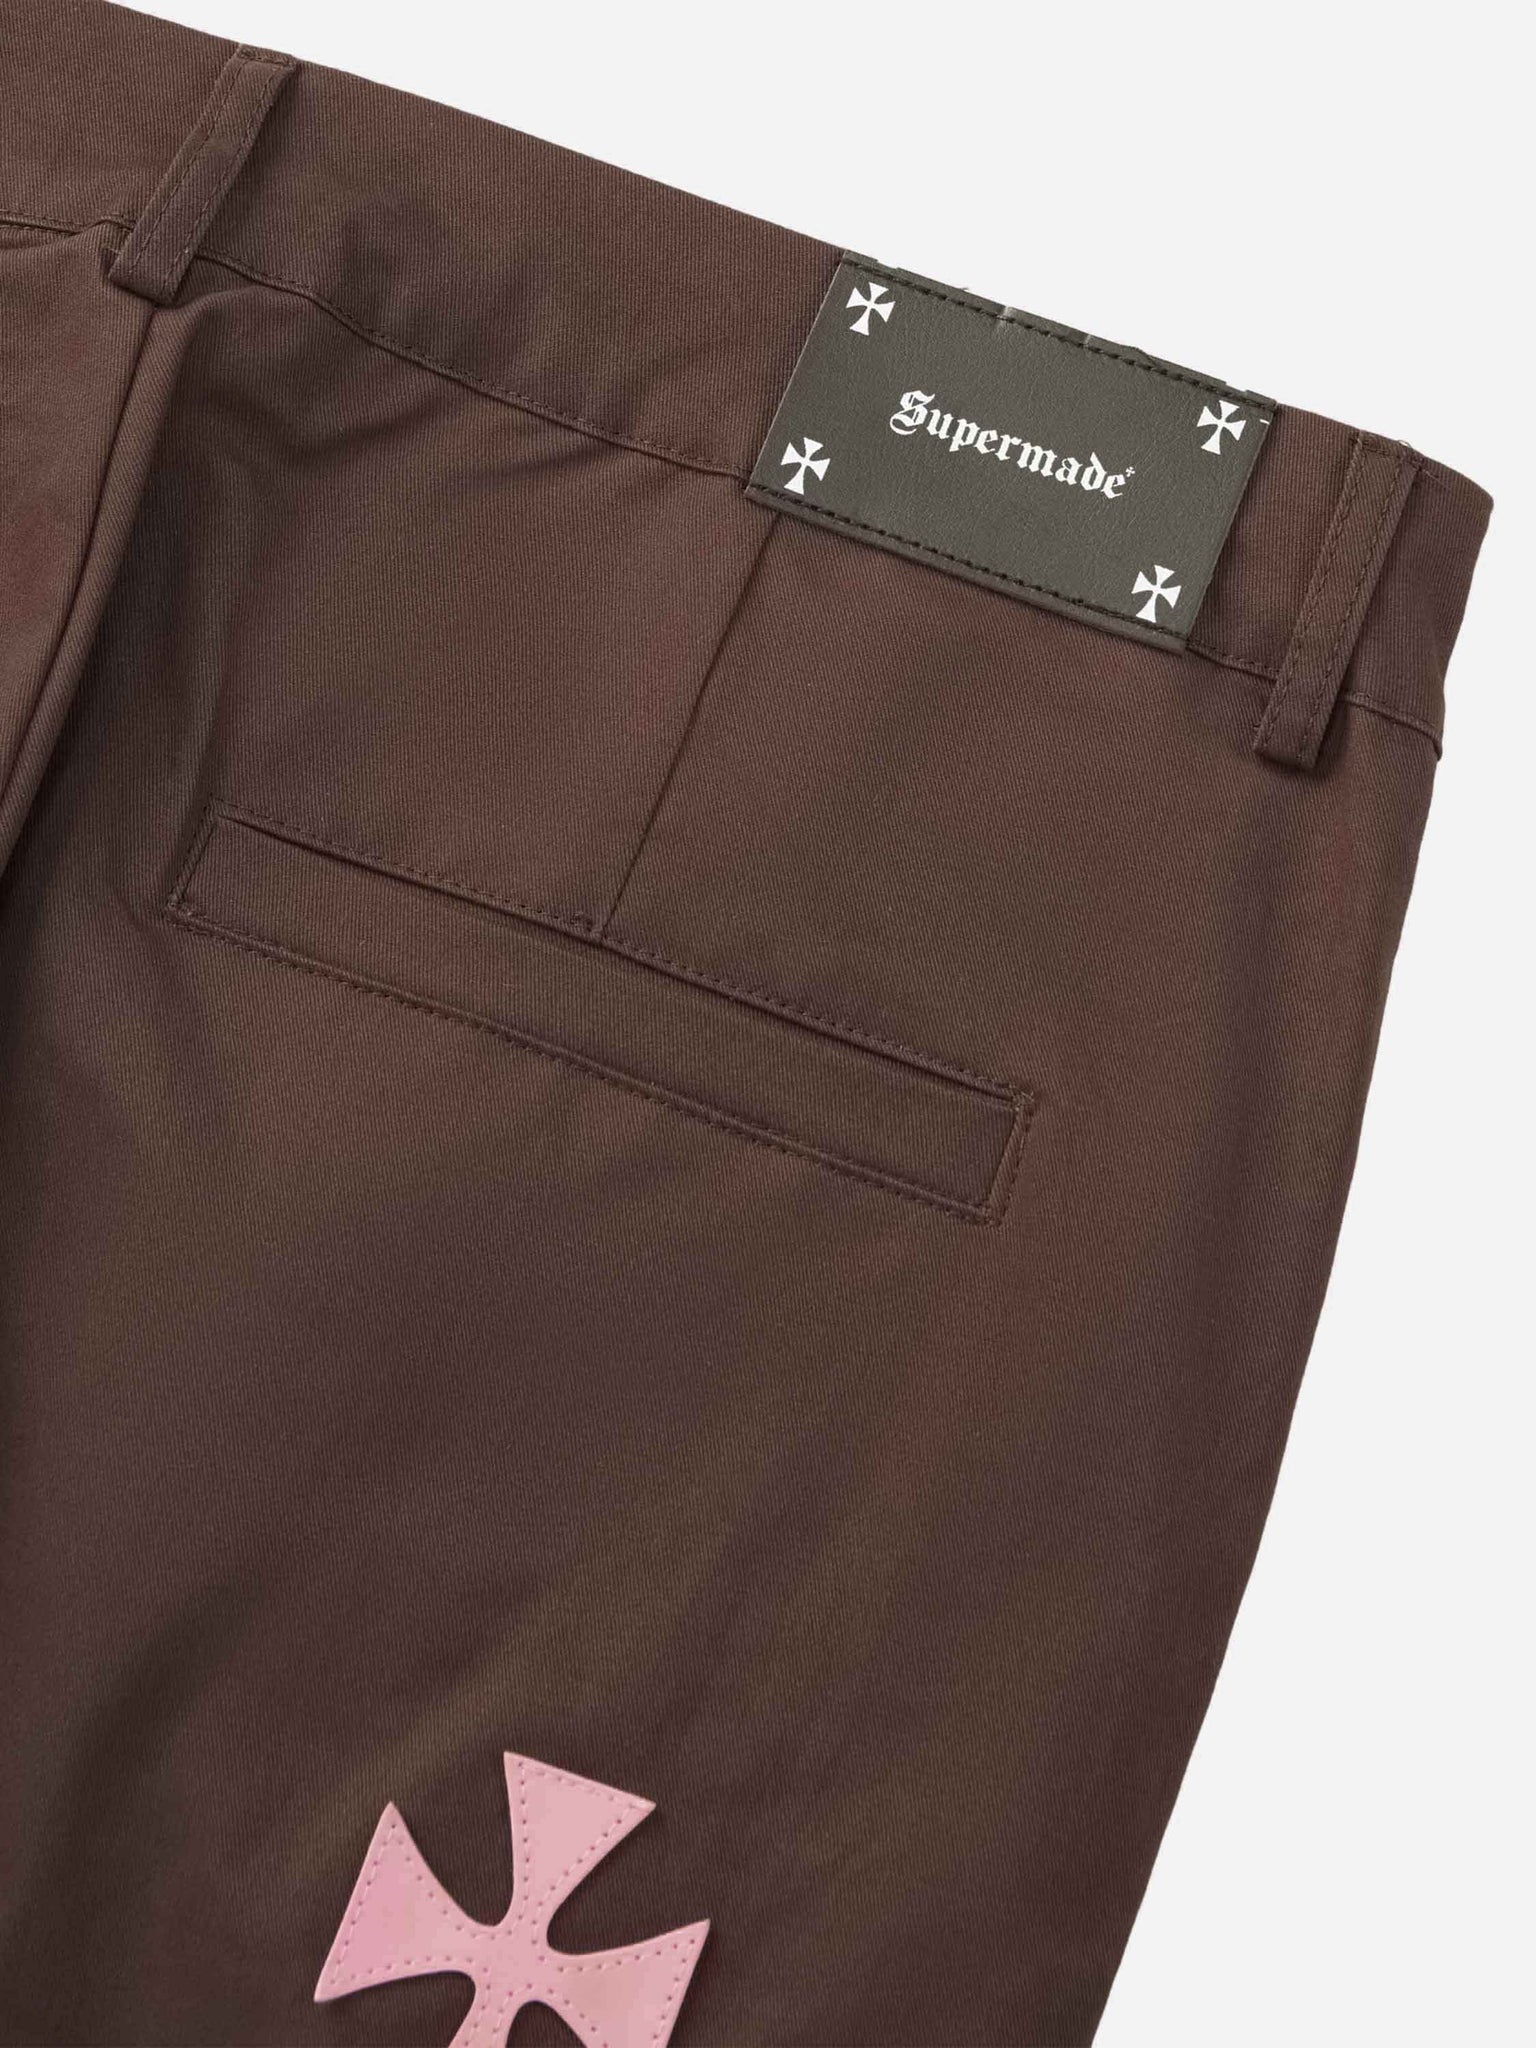 Thesupermade American Casual Versatile Multi-pocket Casual Pants - 1831